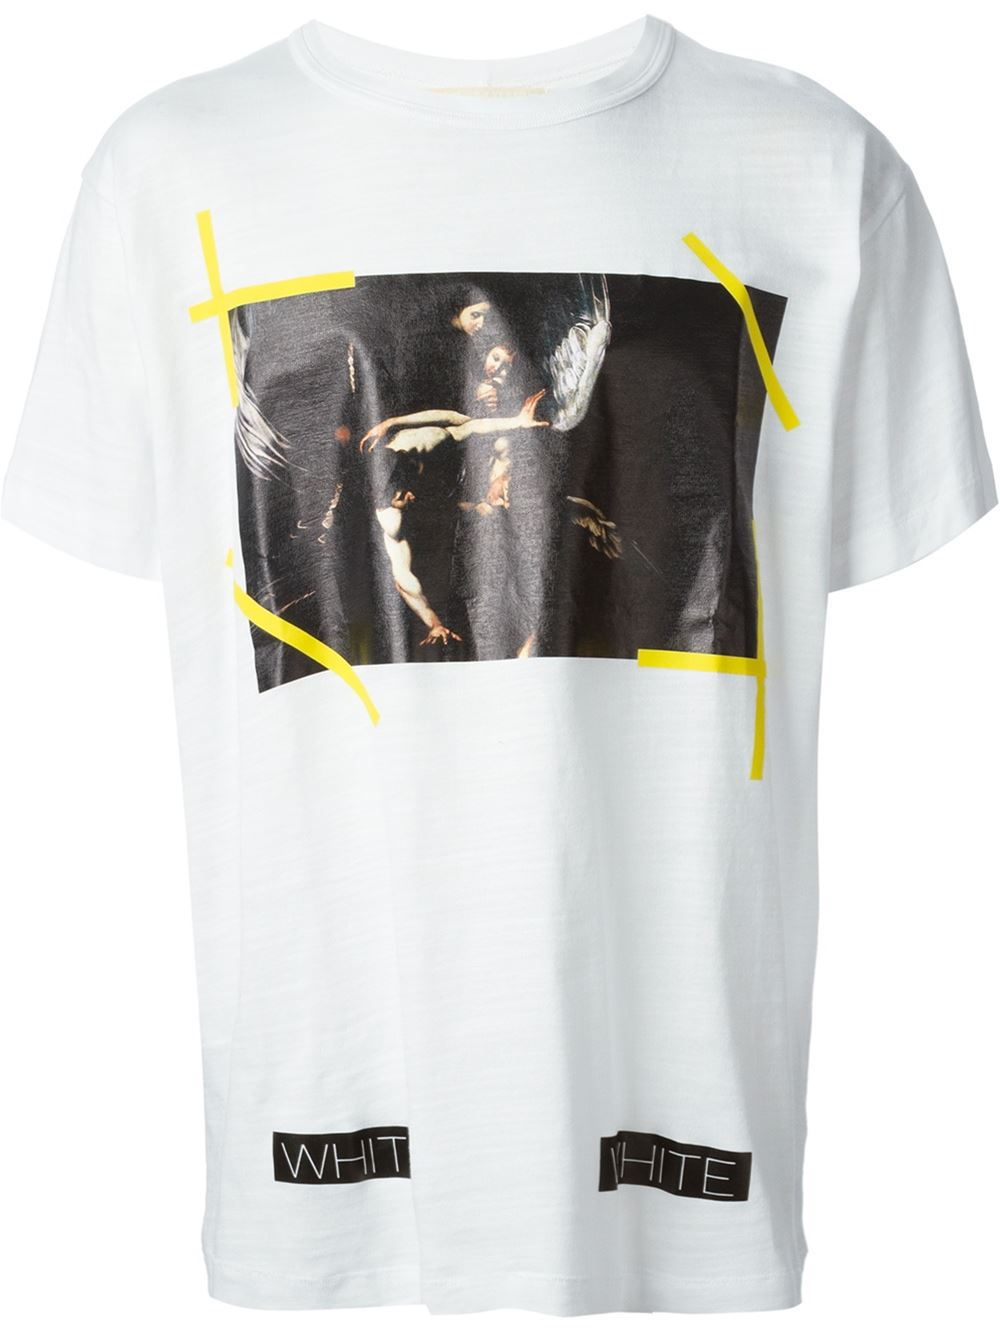 Off-White c/o Virgil Abloh Caravaggio-Print T-Shirt in White for Men - Lyst